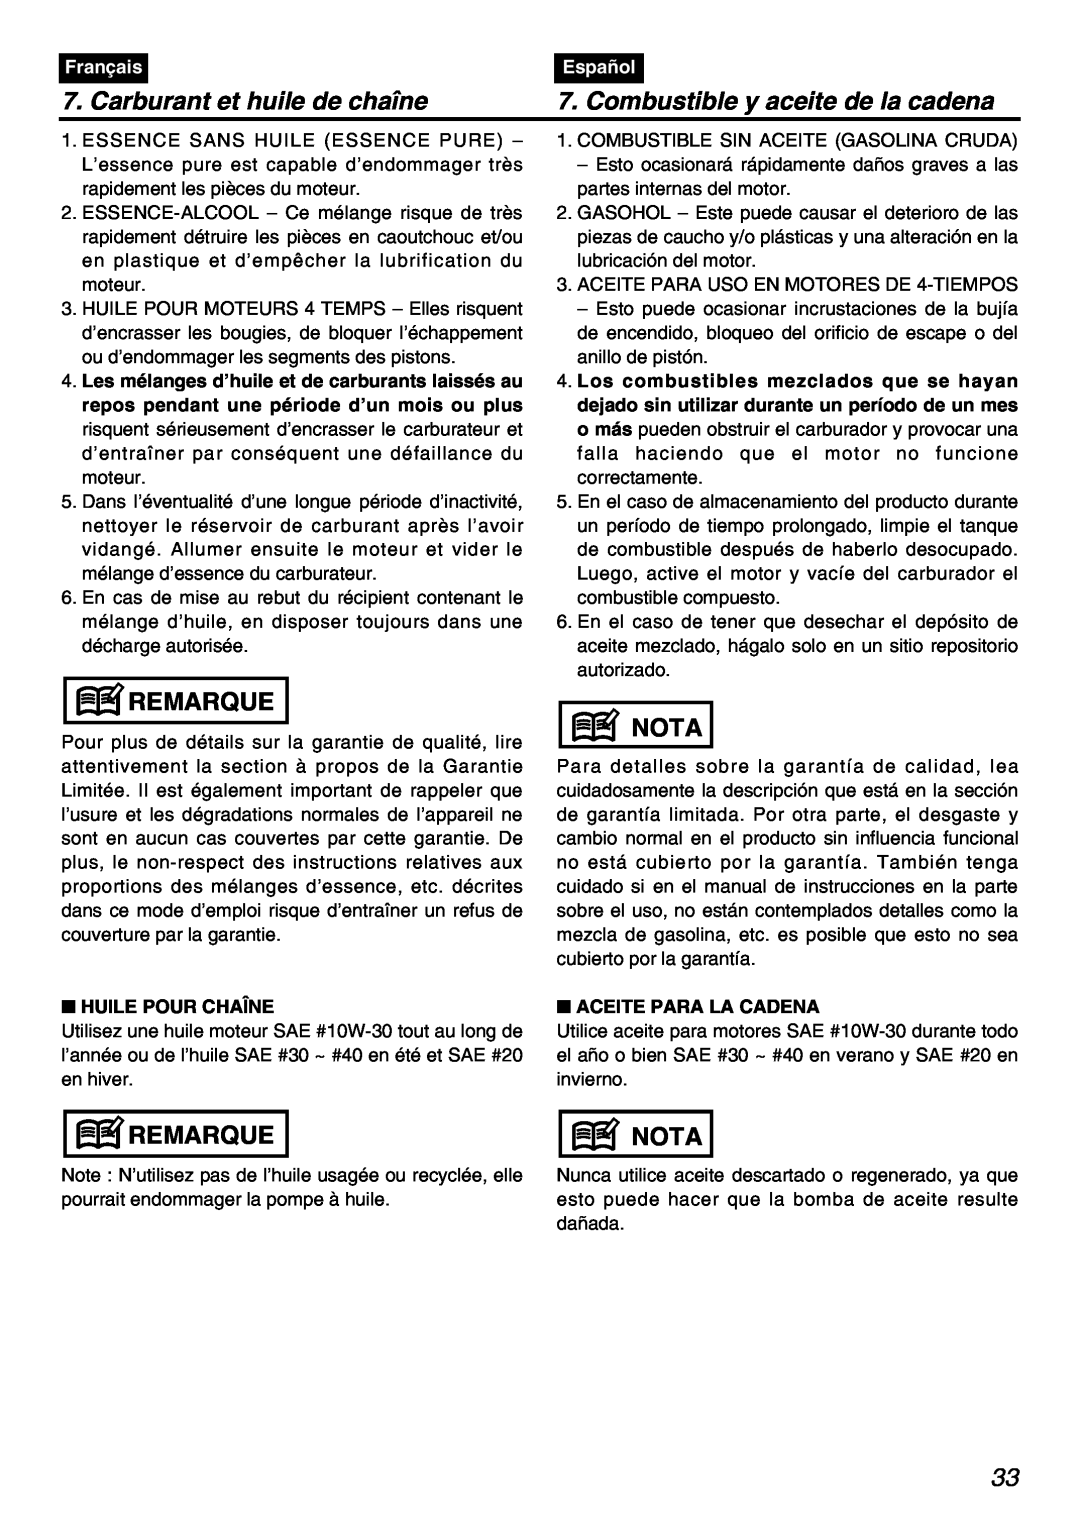 Zenoah PSZ2401 manual Carburant et huile de chaîne, Combustible y aceite de la cadena, Remarque, Nota, Français, Español 